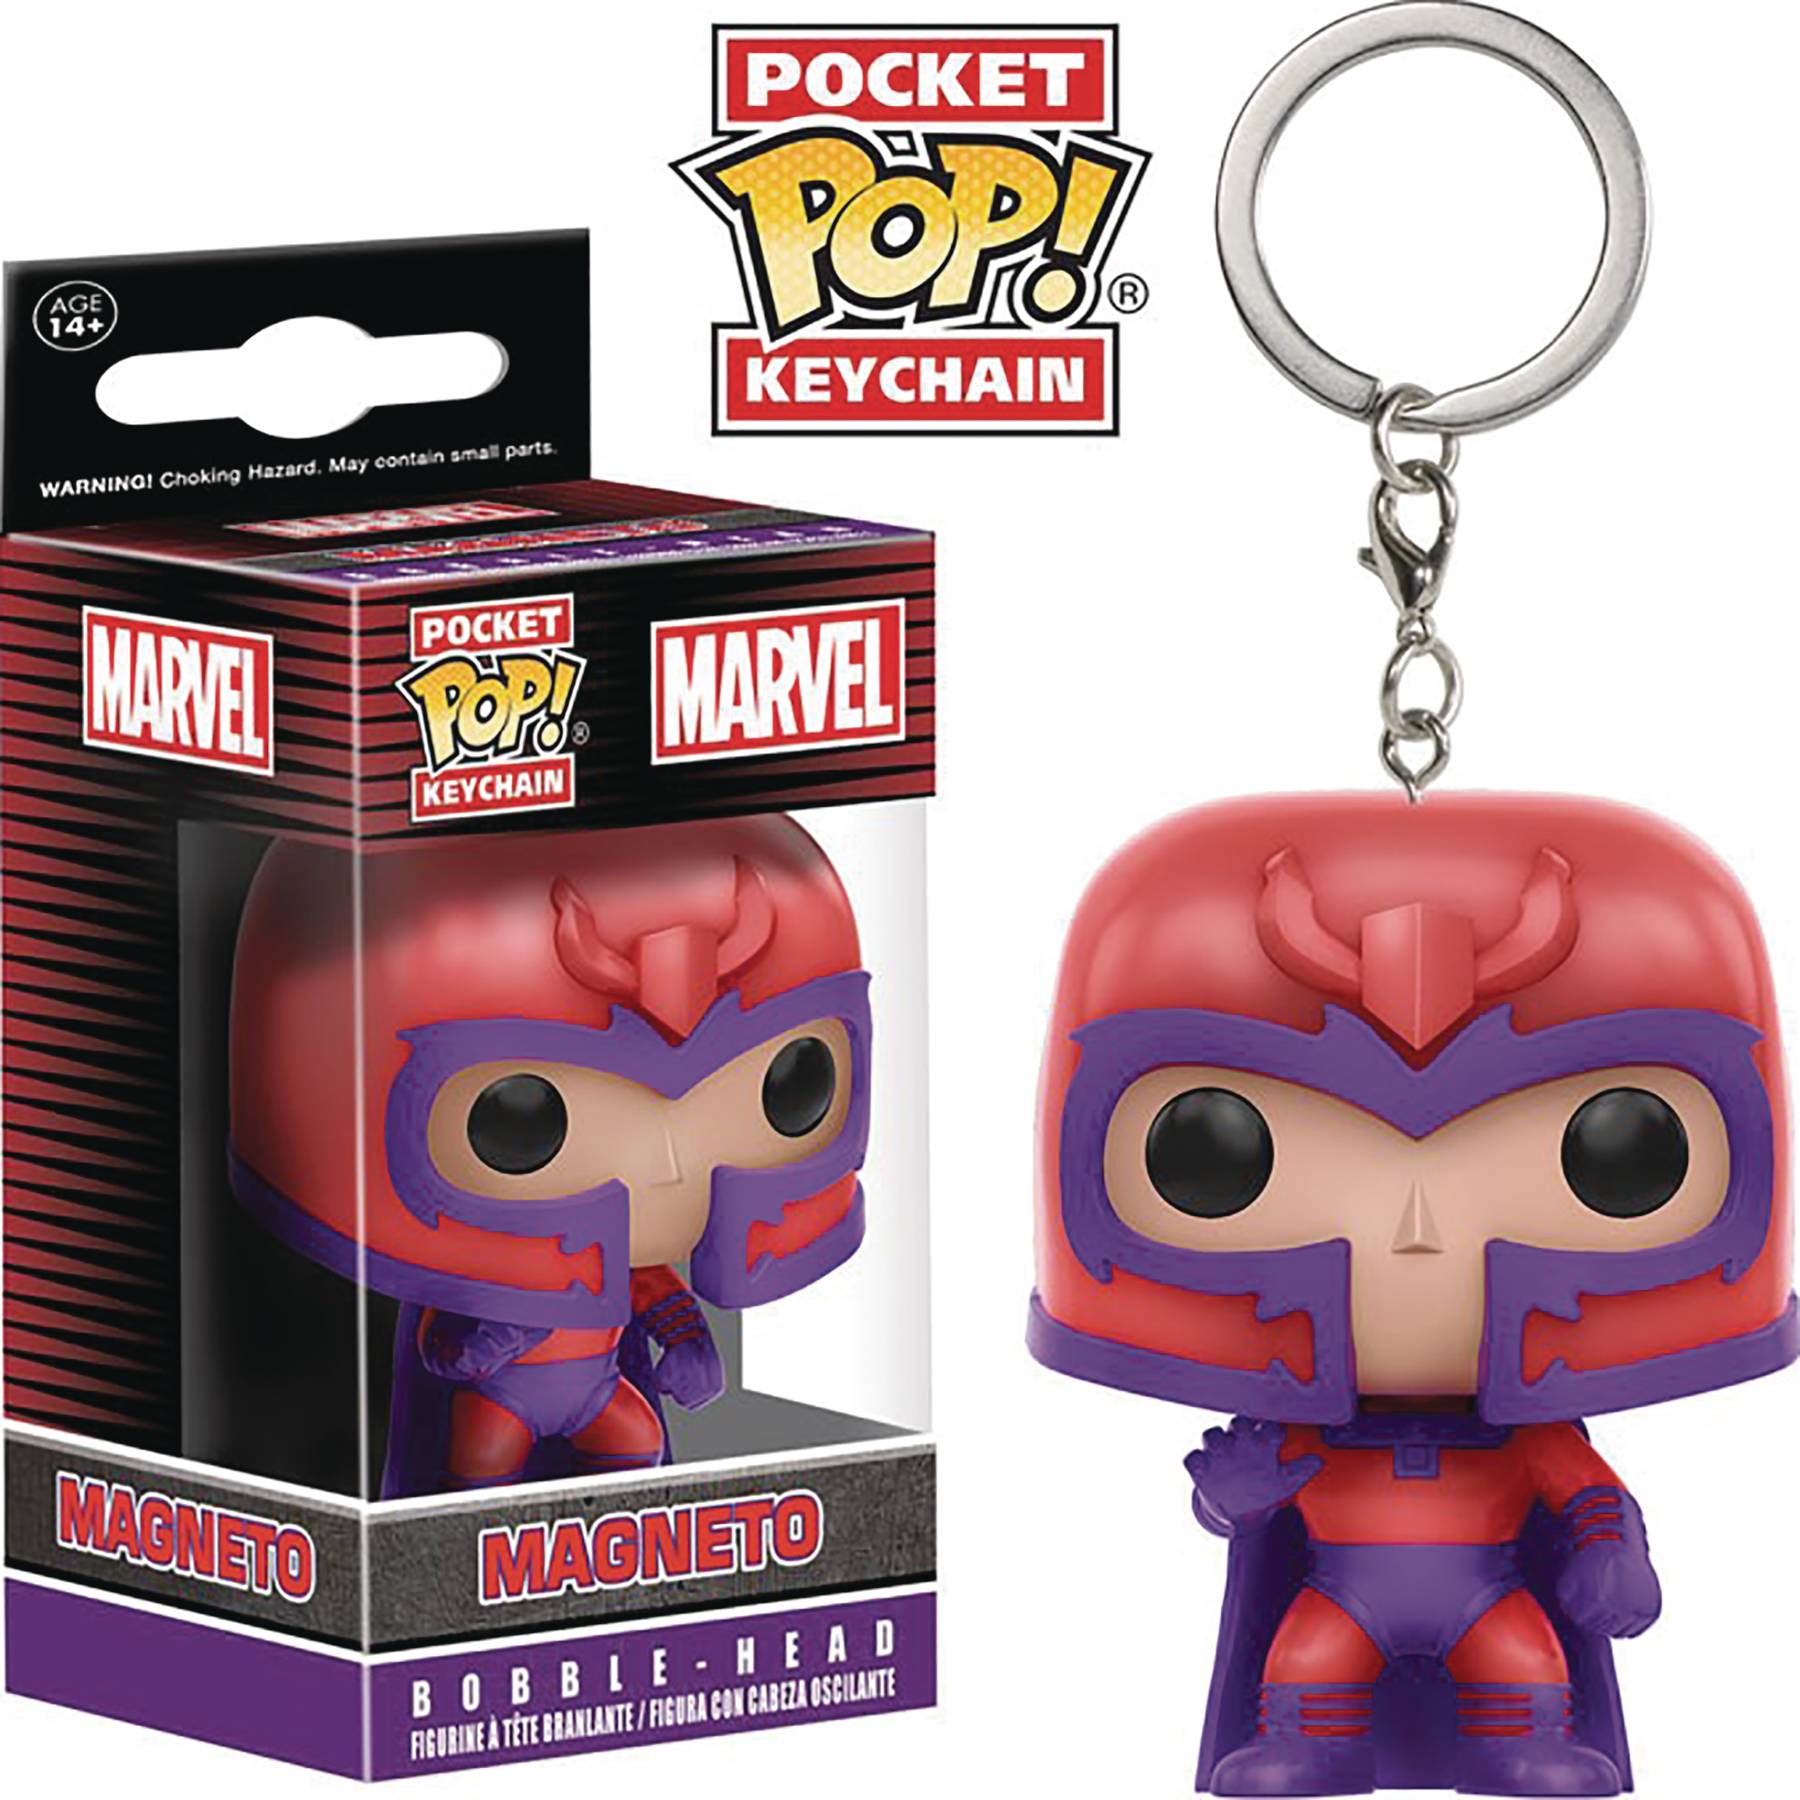 Pocket Pop X-Men Magneto Fig Keychain